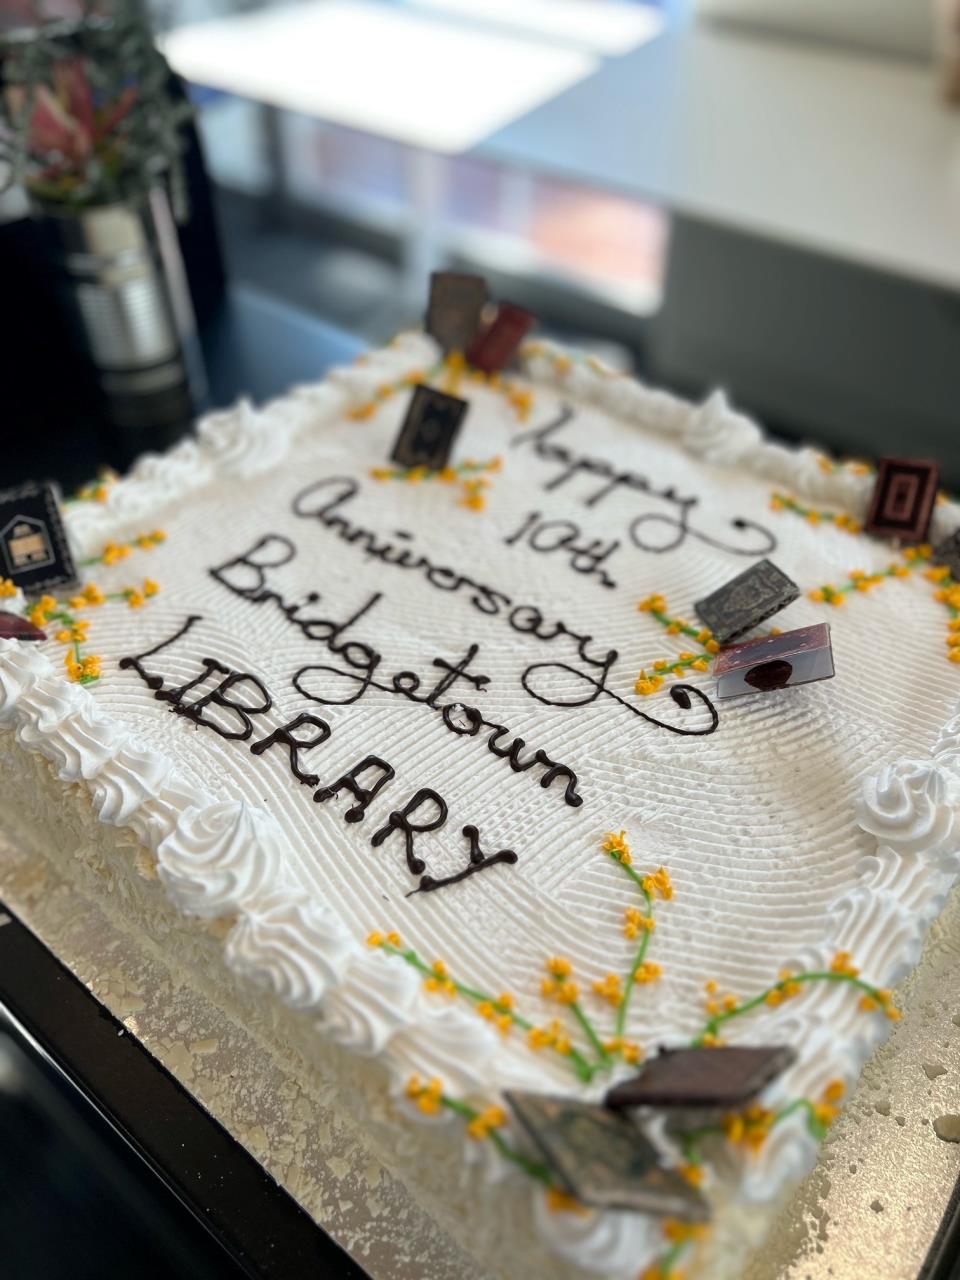 Bridgetown Library’s 10th Anniversary Celebration